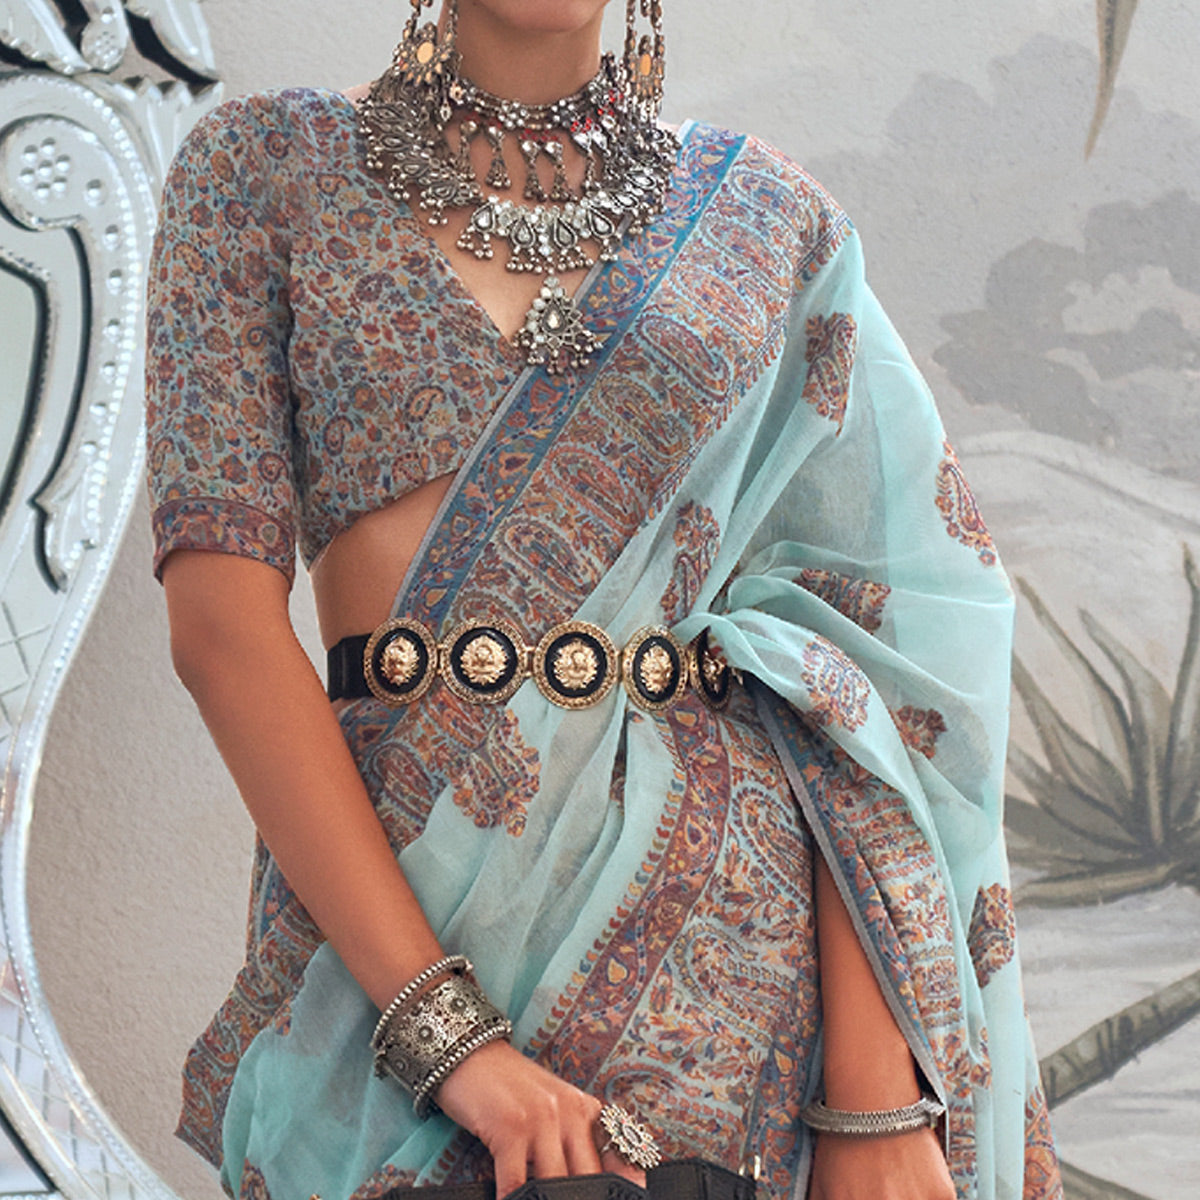 Turquoise Color Chanderi Silk Saree.